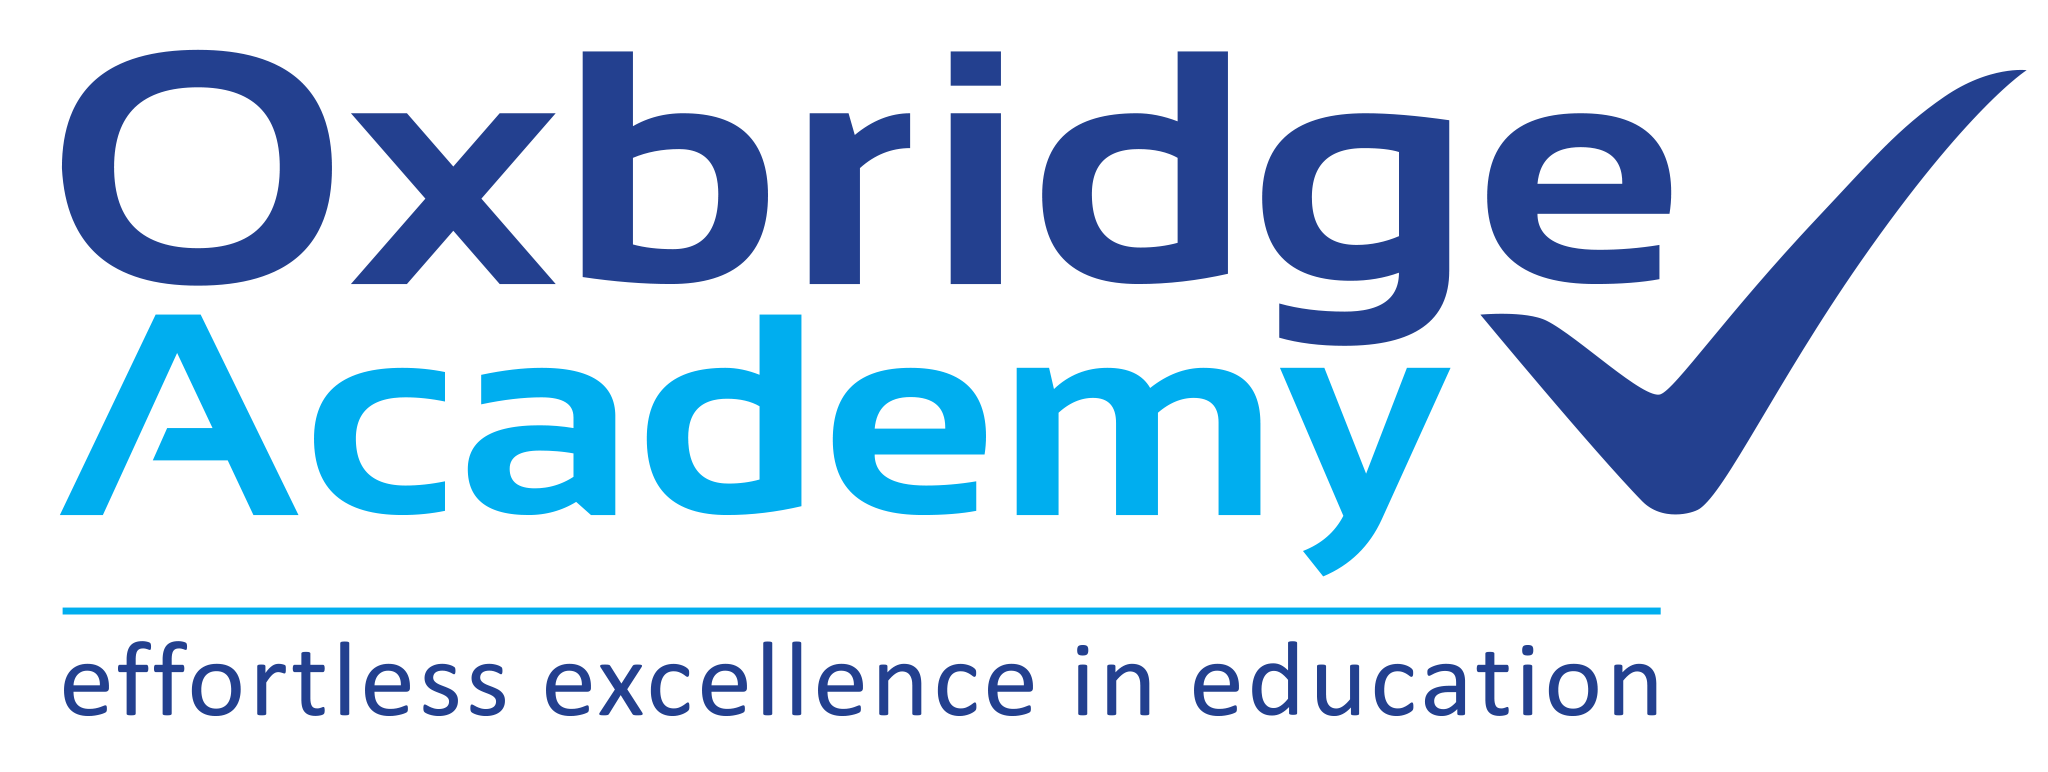 Oxbridge Academy logo